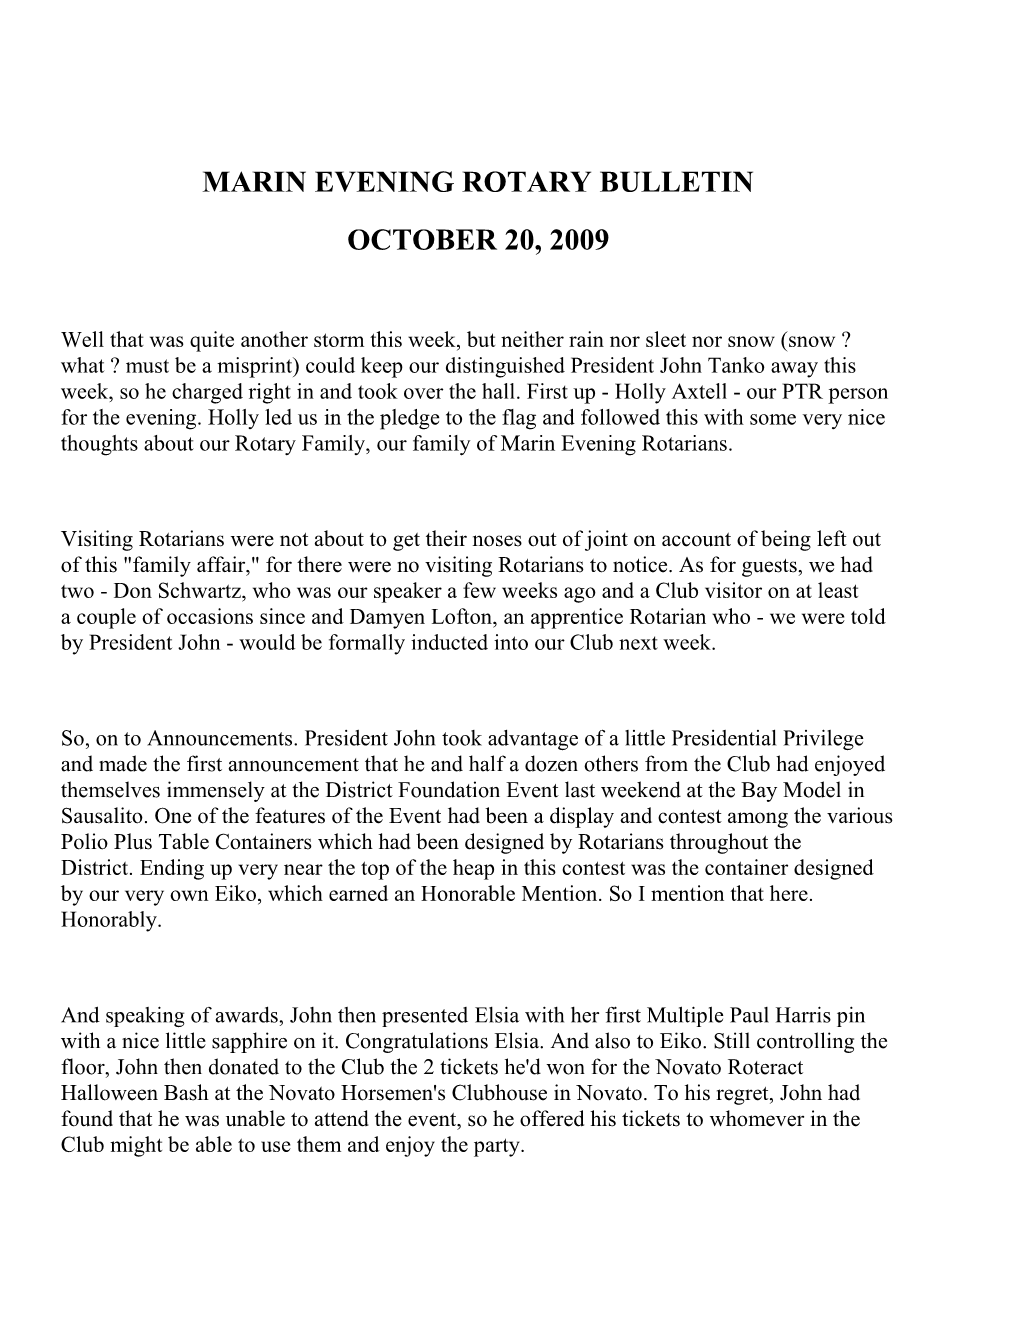 Marin Evening Rotary Bulletin